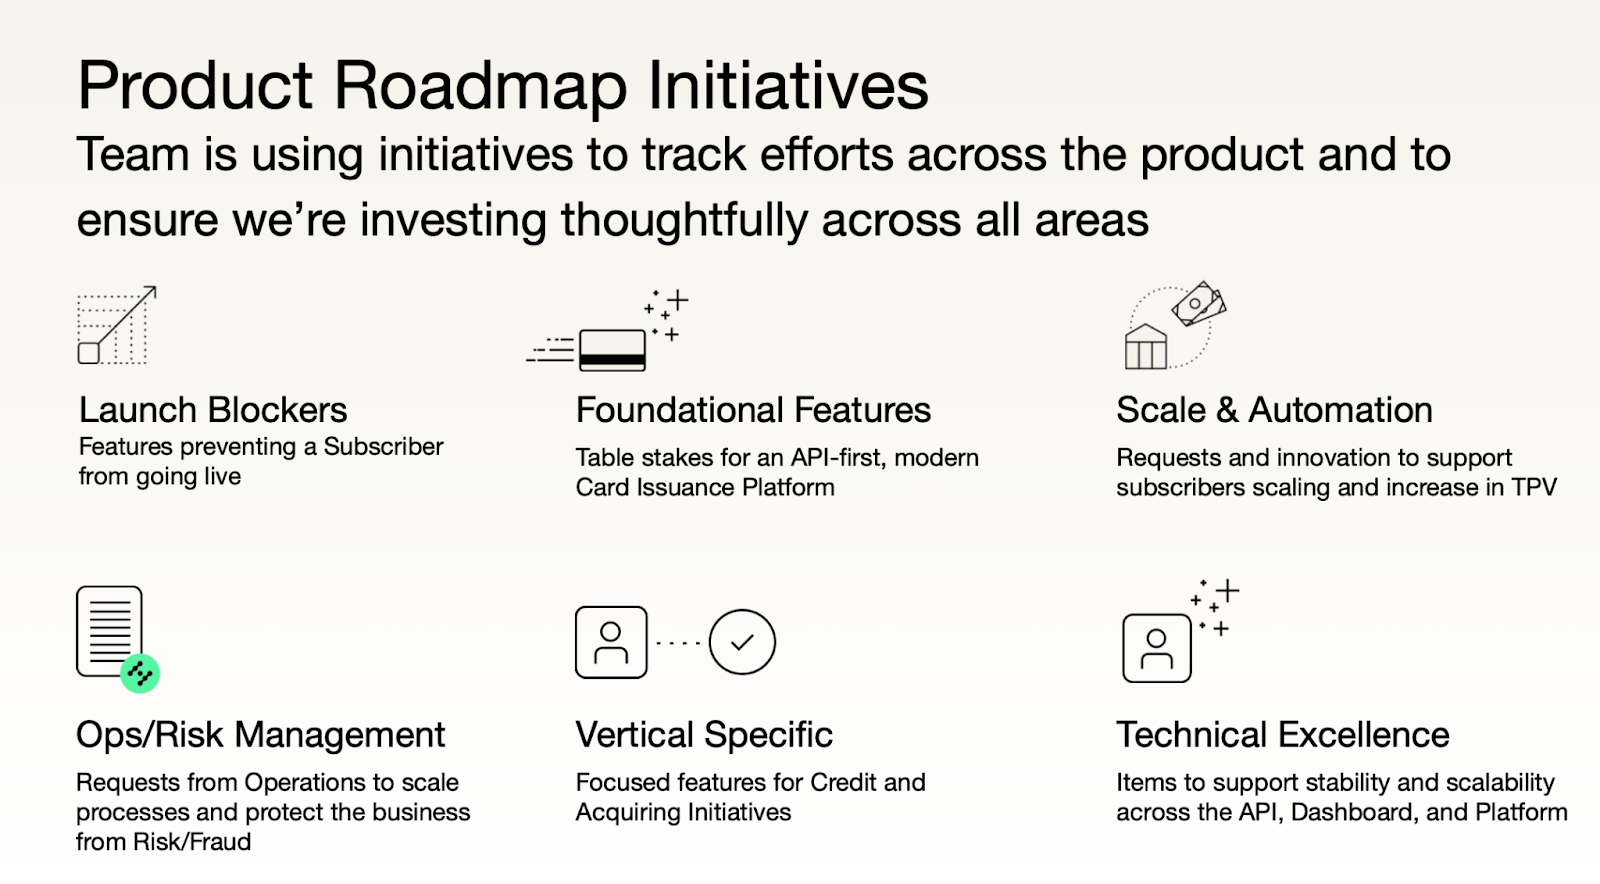 Product roadmap initiatives